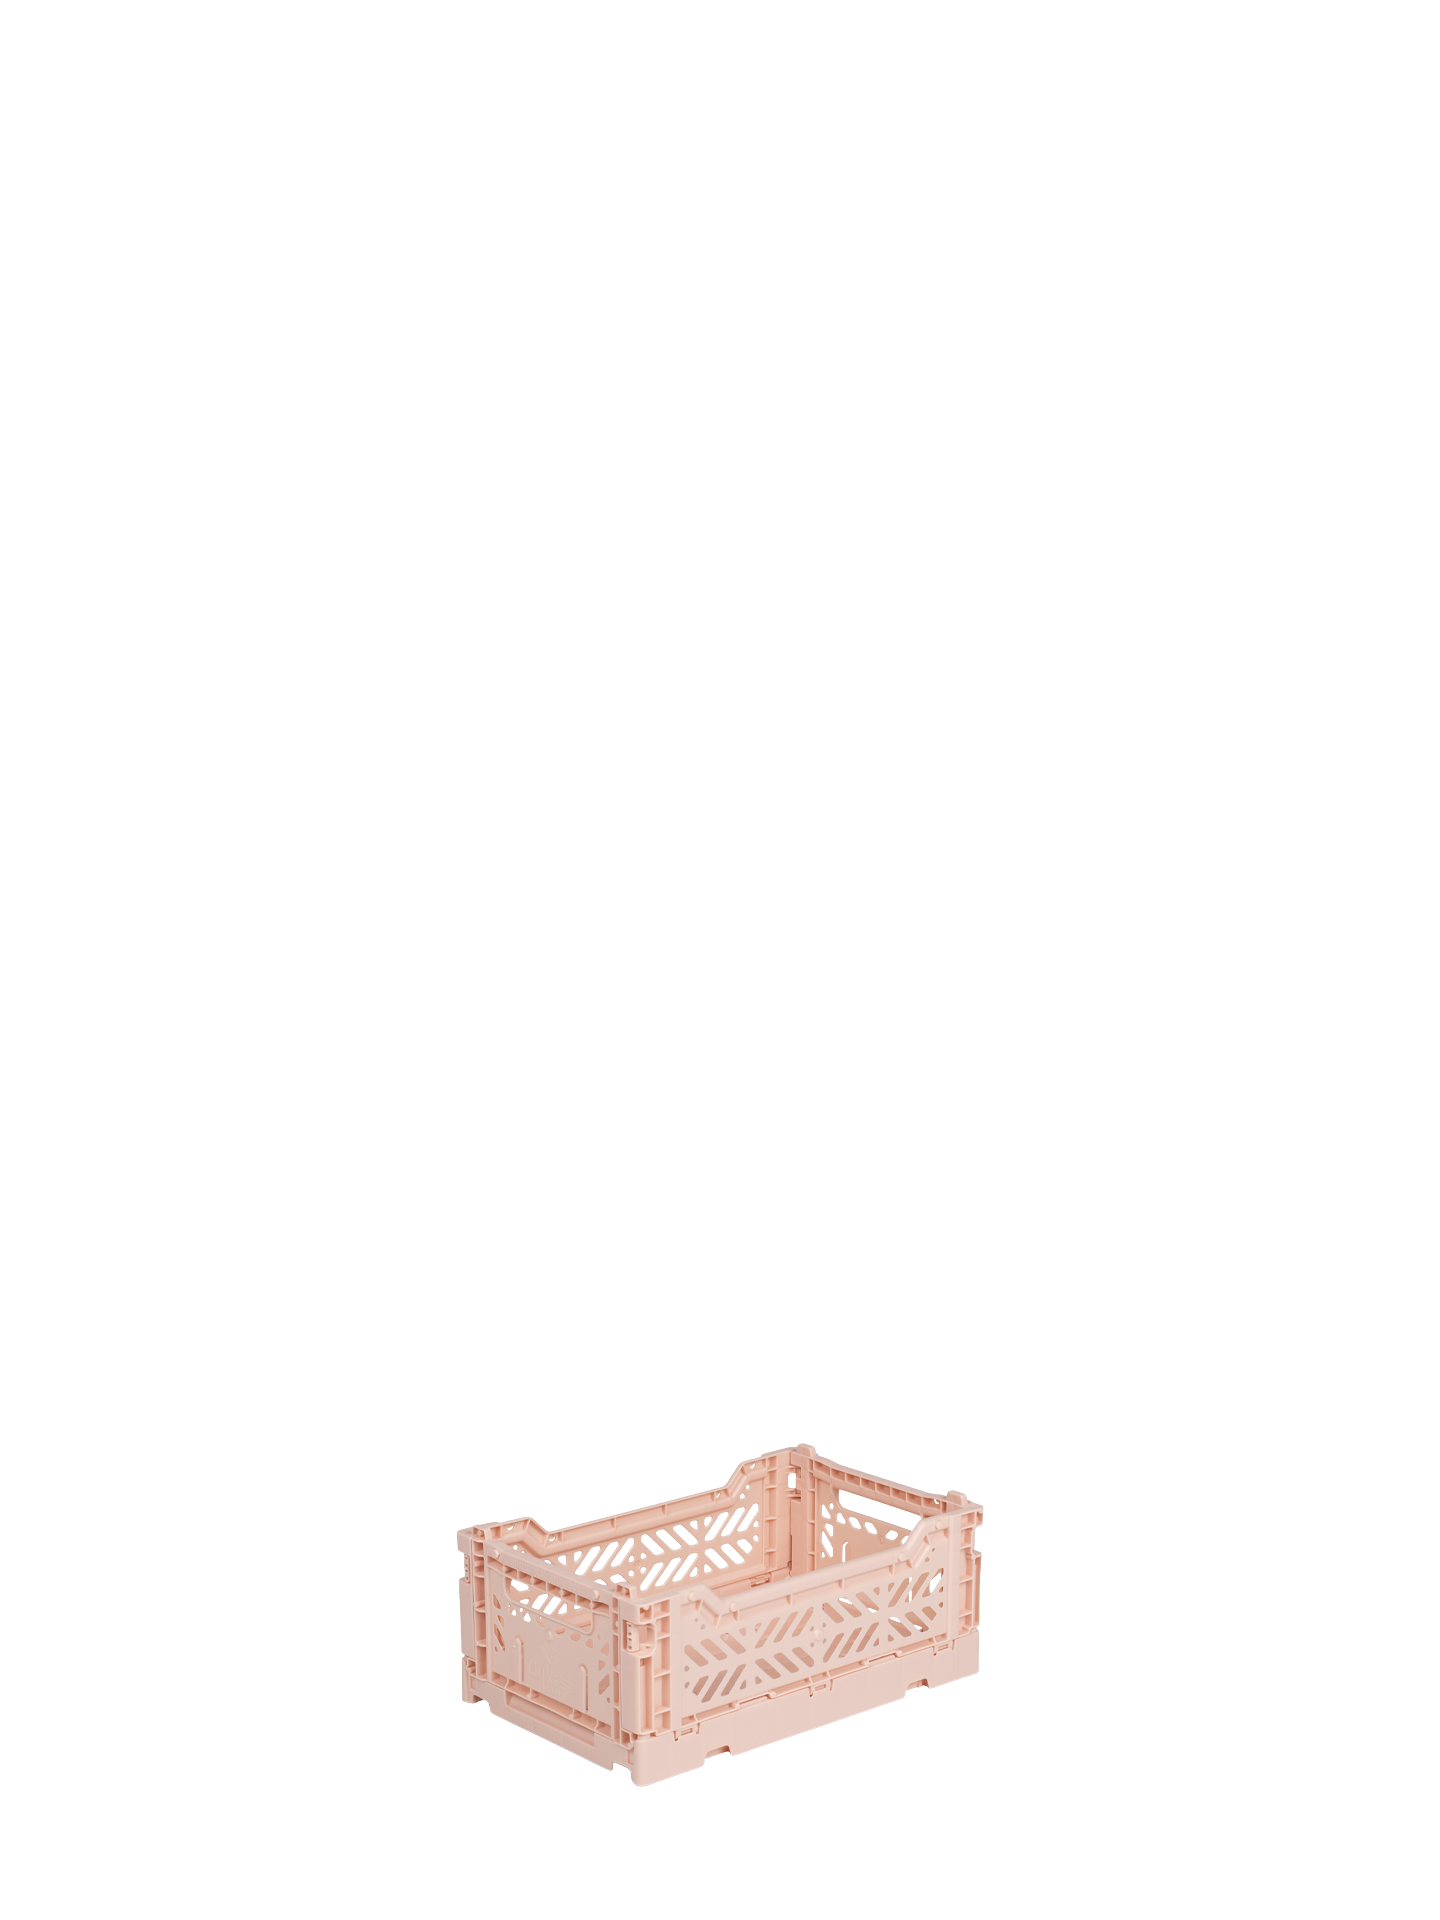 Mini Aykasa crate in milk tea stacks and folds